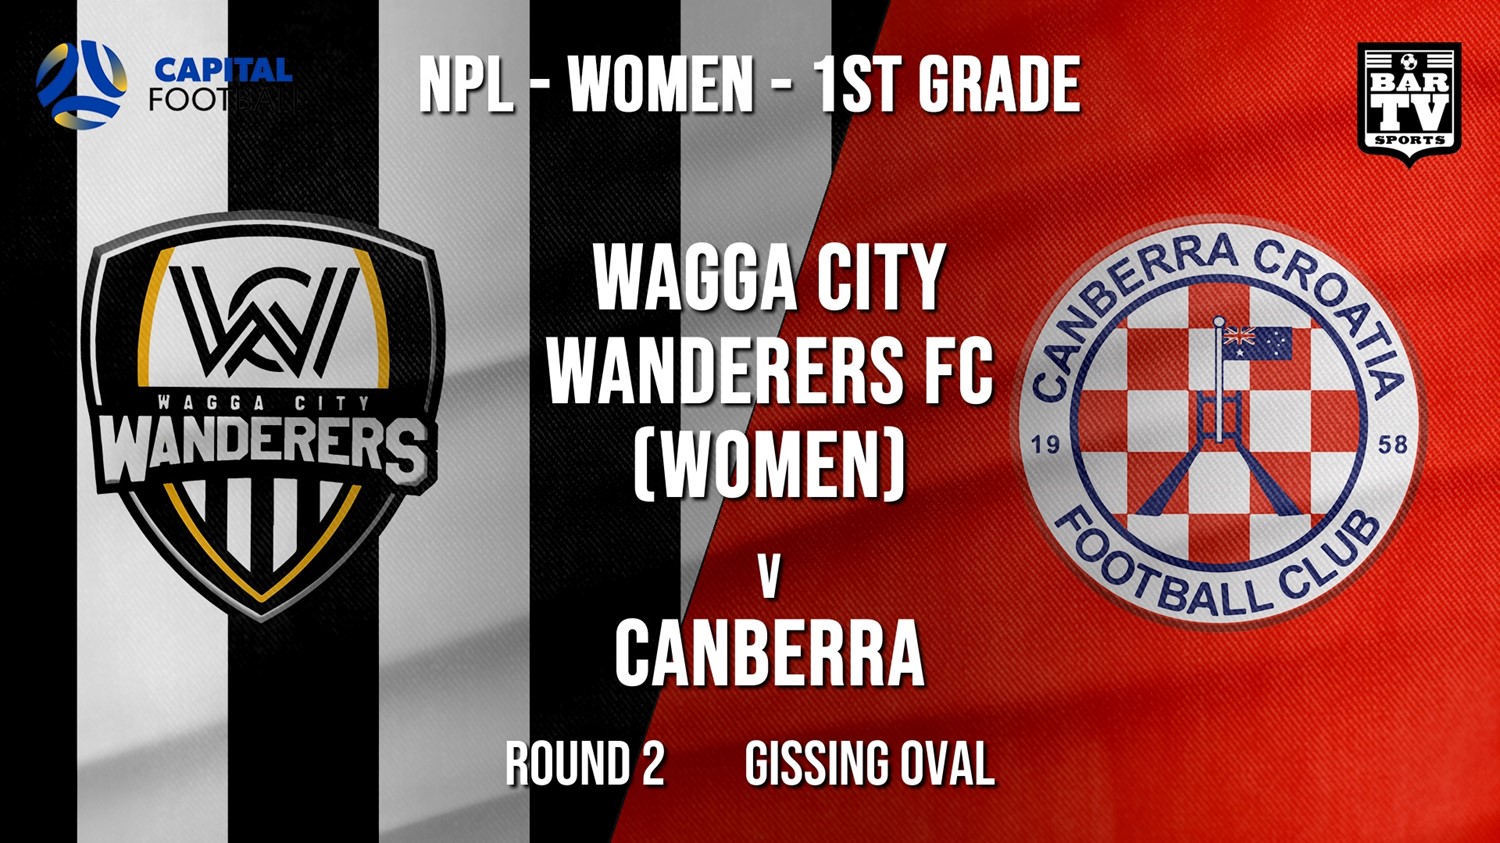 NPL Women - 1st Grade - Capital Football  Round 2 - Wagga City Wanderers FC (women) v Canberra FC (women) Minigame Slate Image